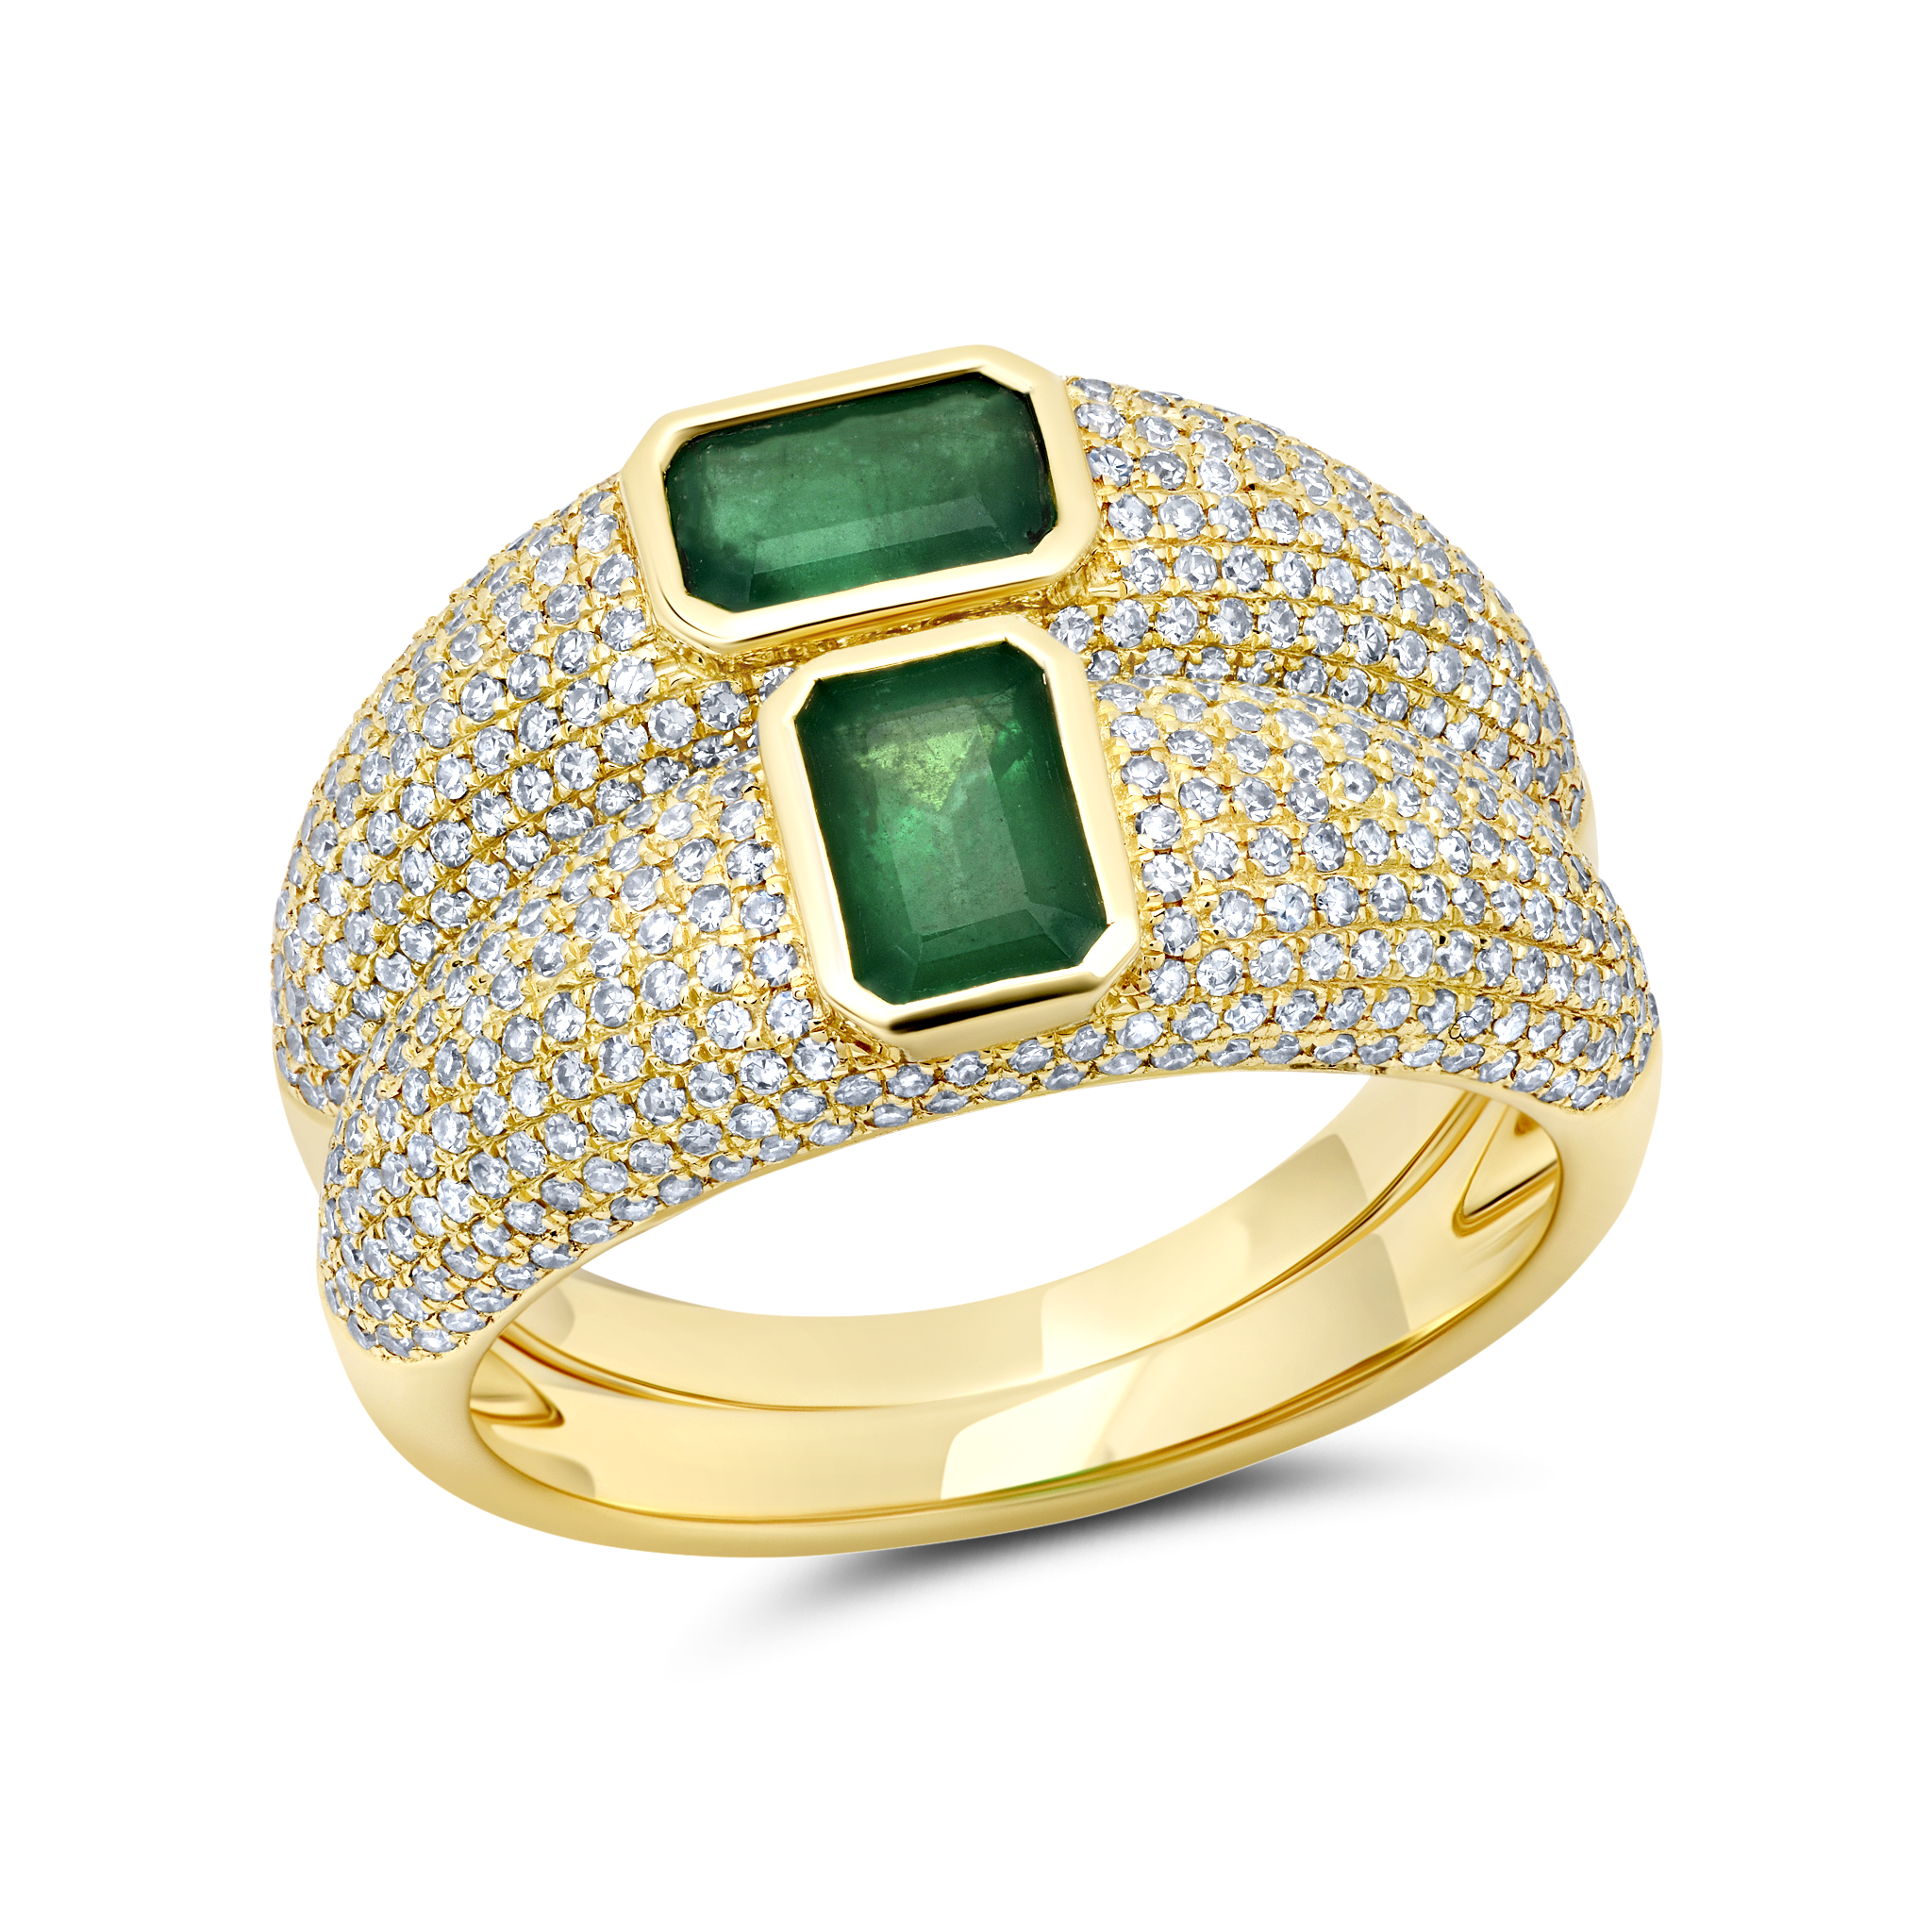 Double Thin Balloon Ring with Emeralds and White Pavé Diamonds - Gabriela Artigas